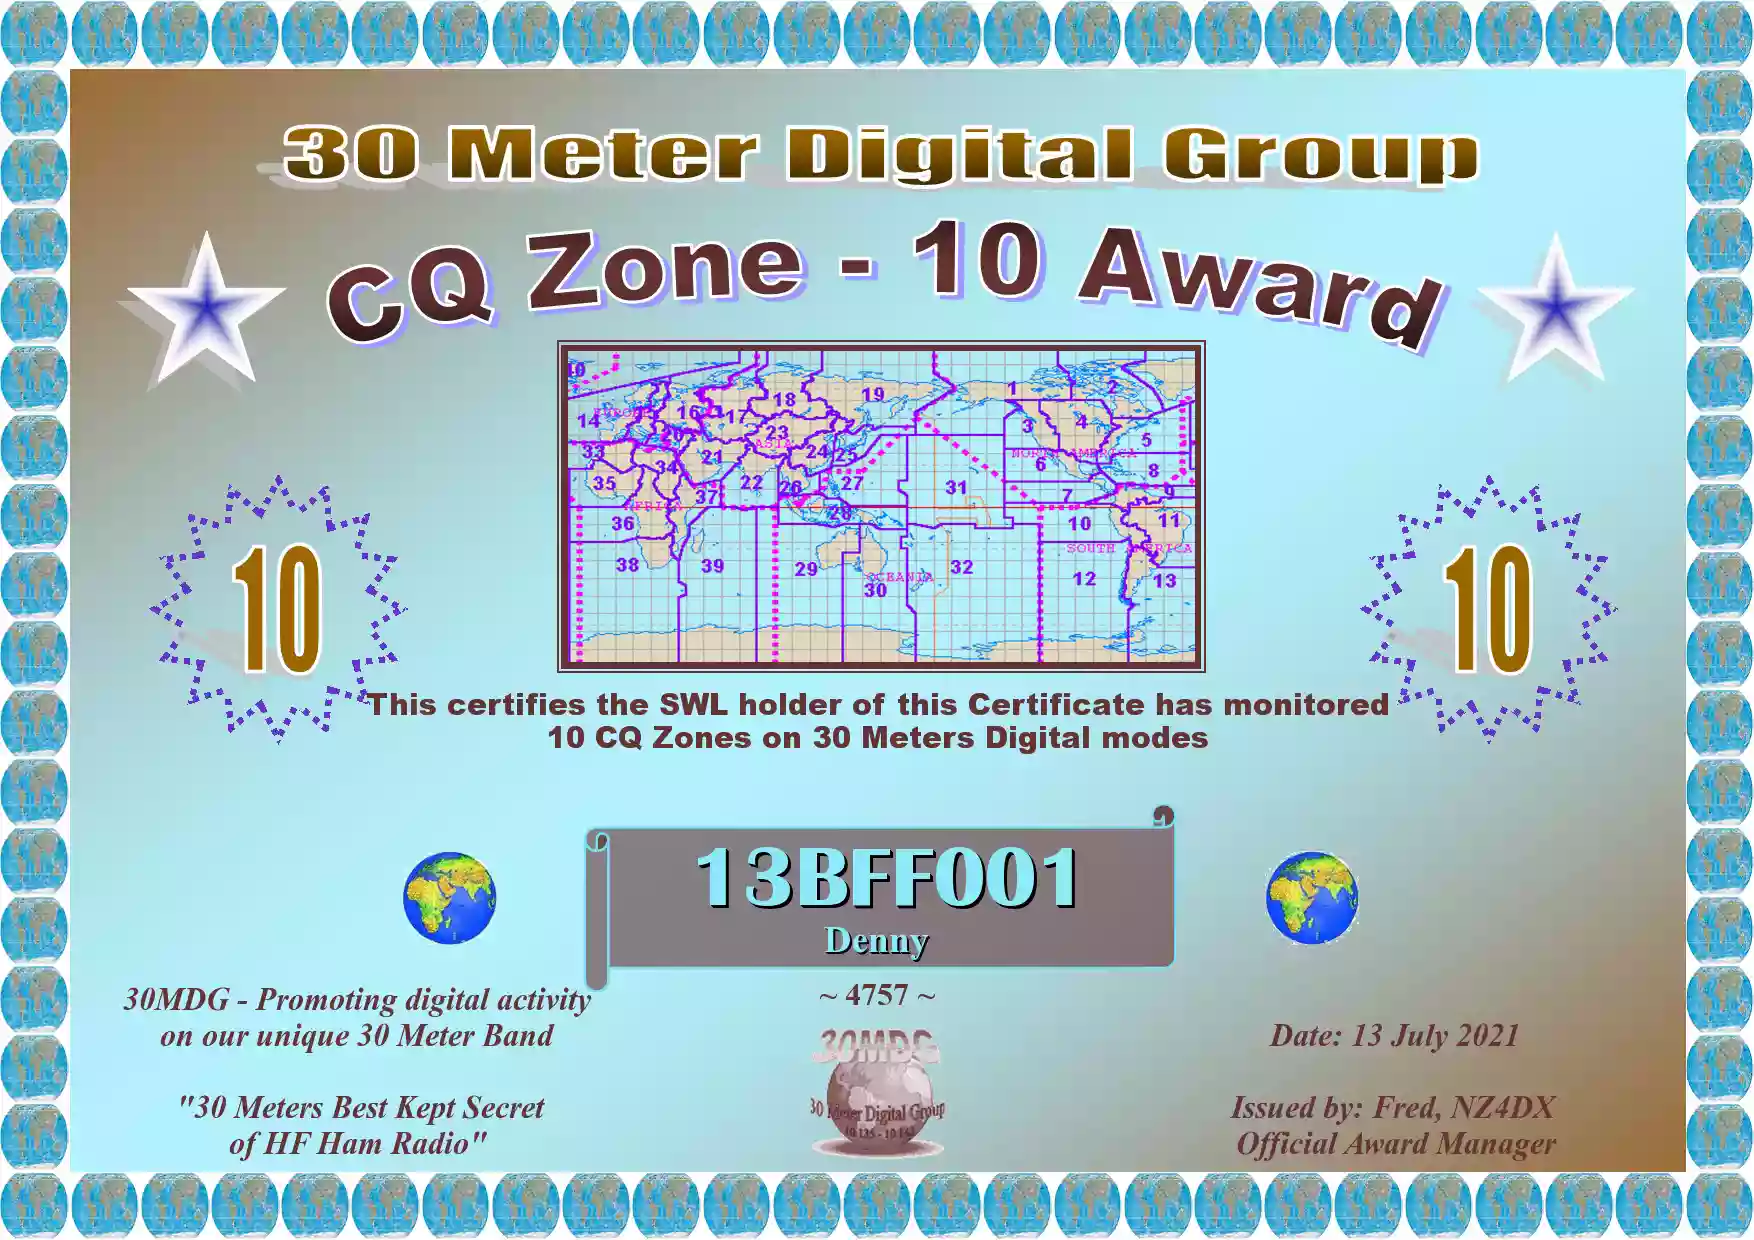 13BFF001 30MDG Certificate